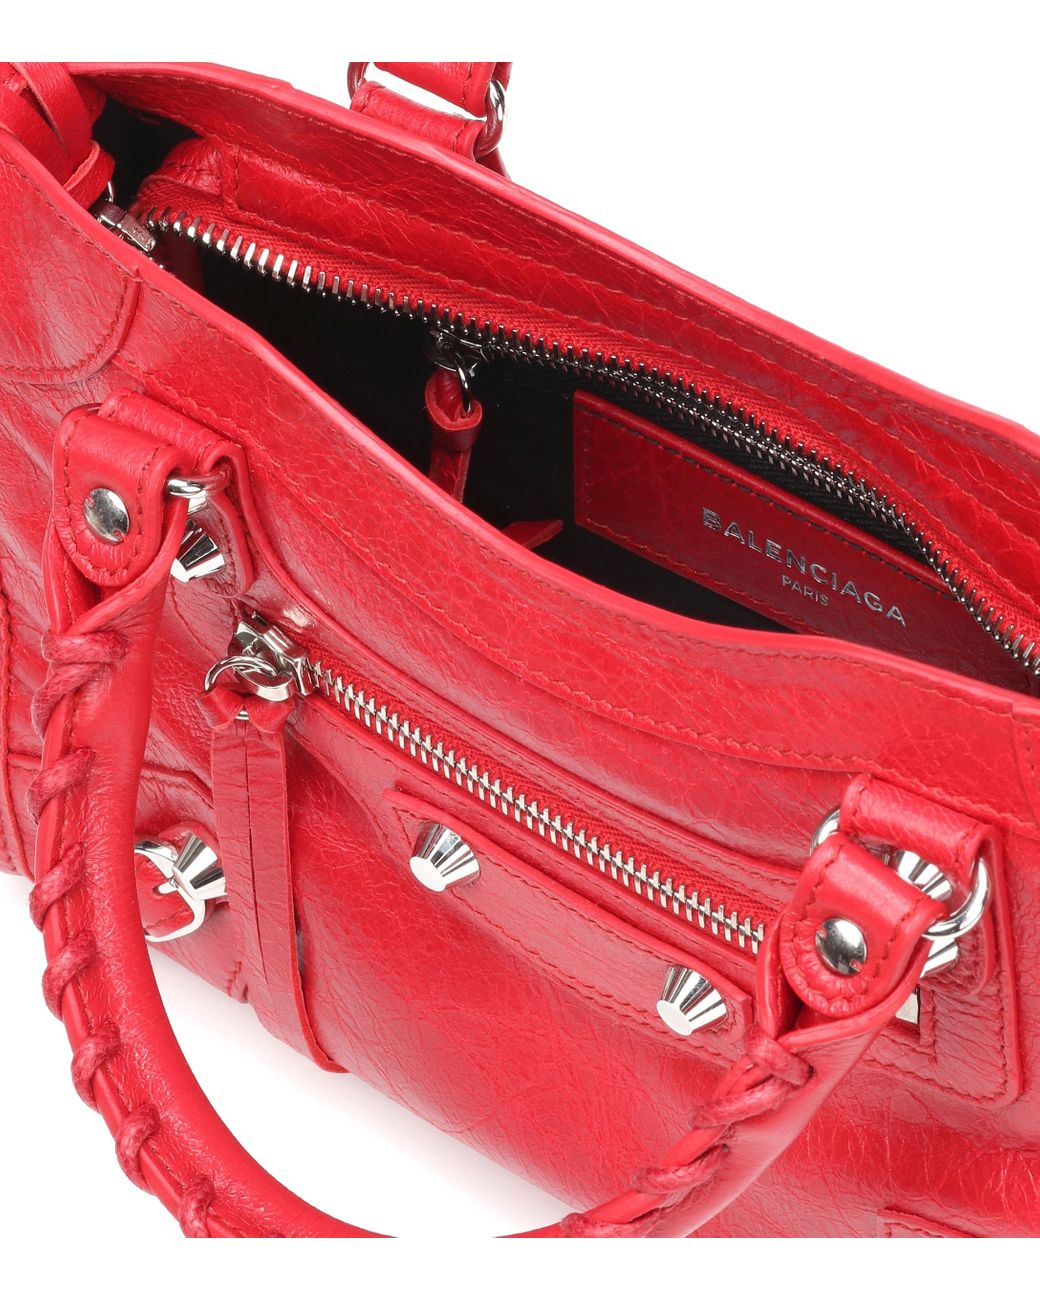 Balenciaga Classic City Mini Leather Tote in Red | Lyst